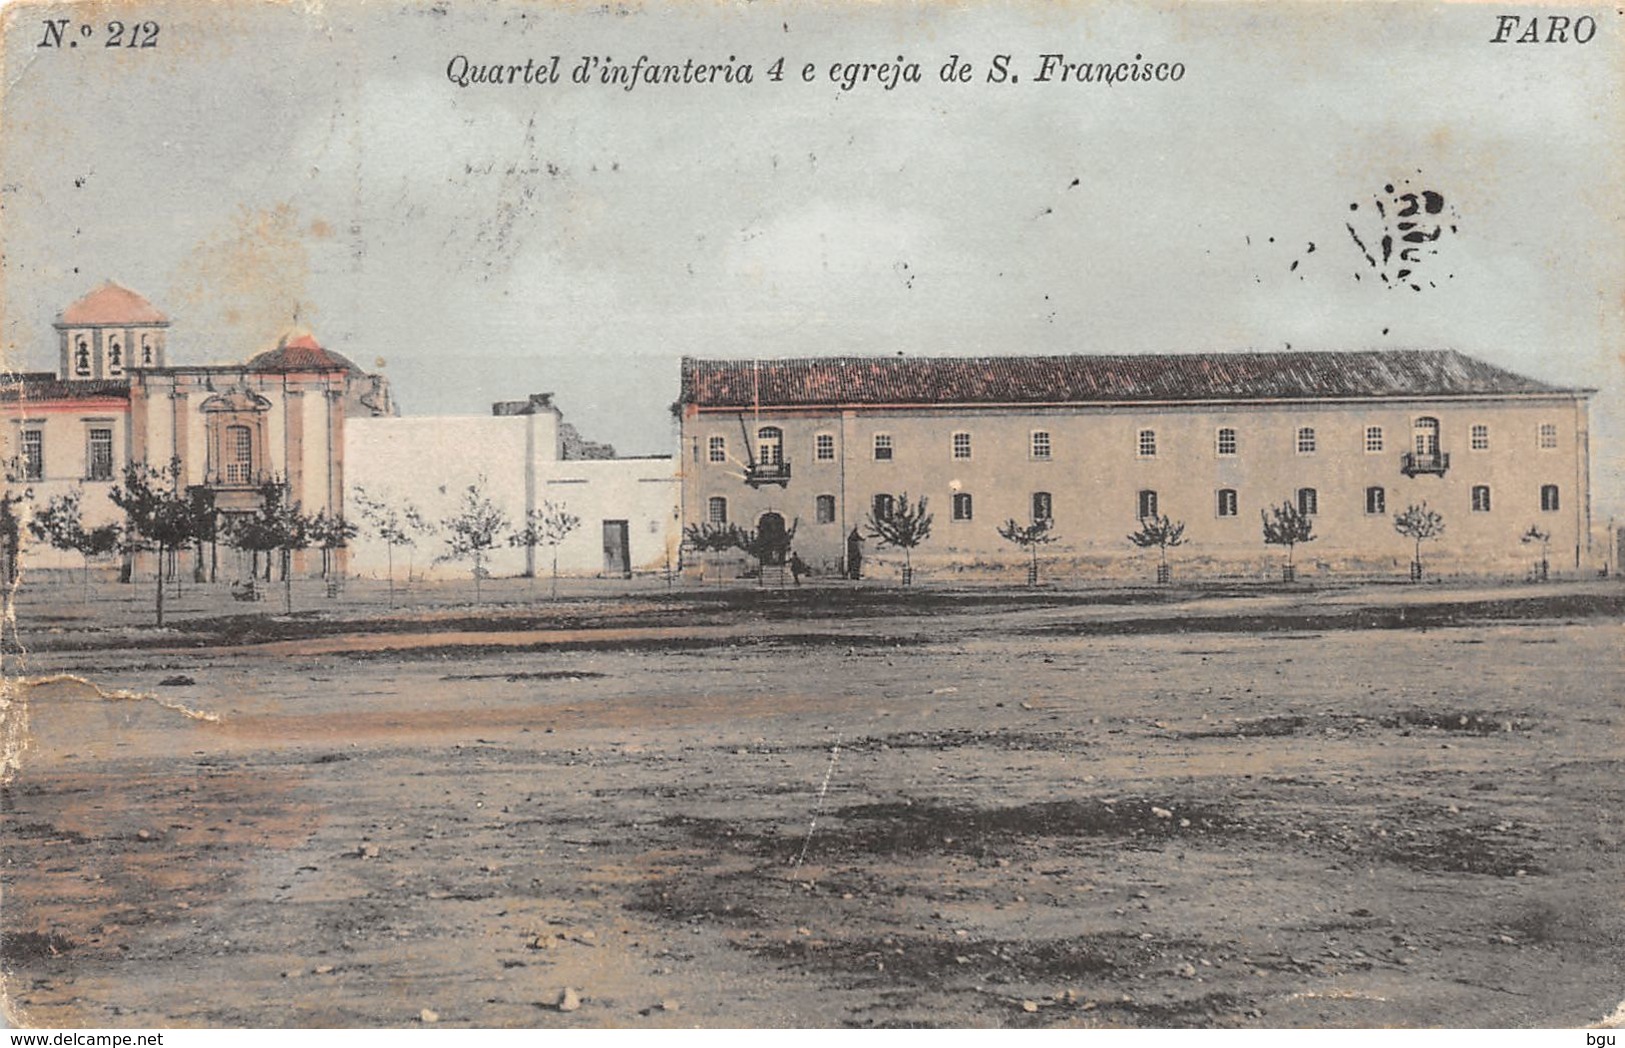 Faro (Portugal) - Quartel D'infanteria 4 E Egreja De S. Francisco - Faro